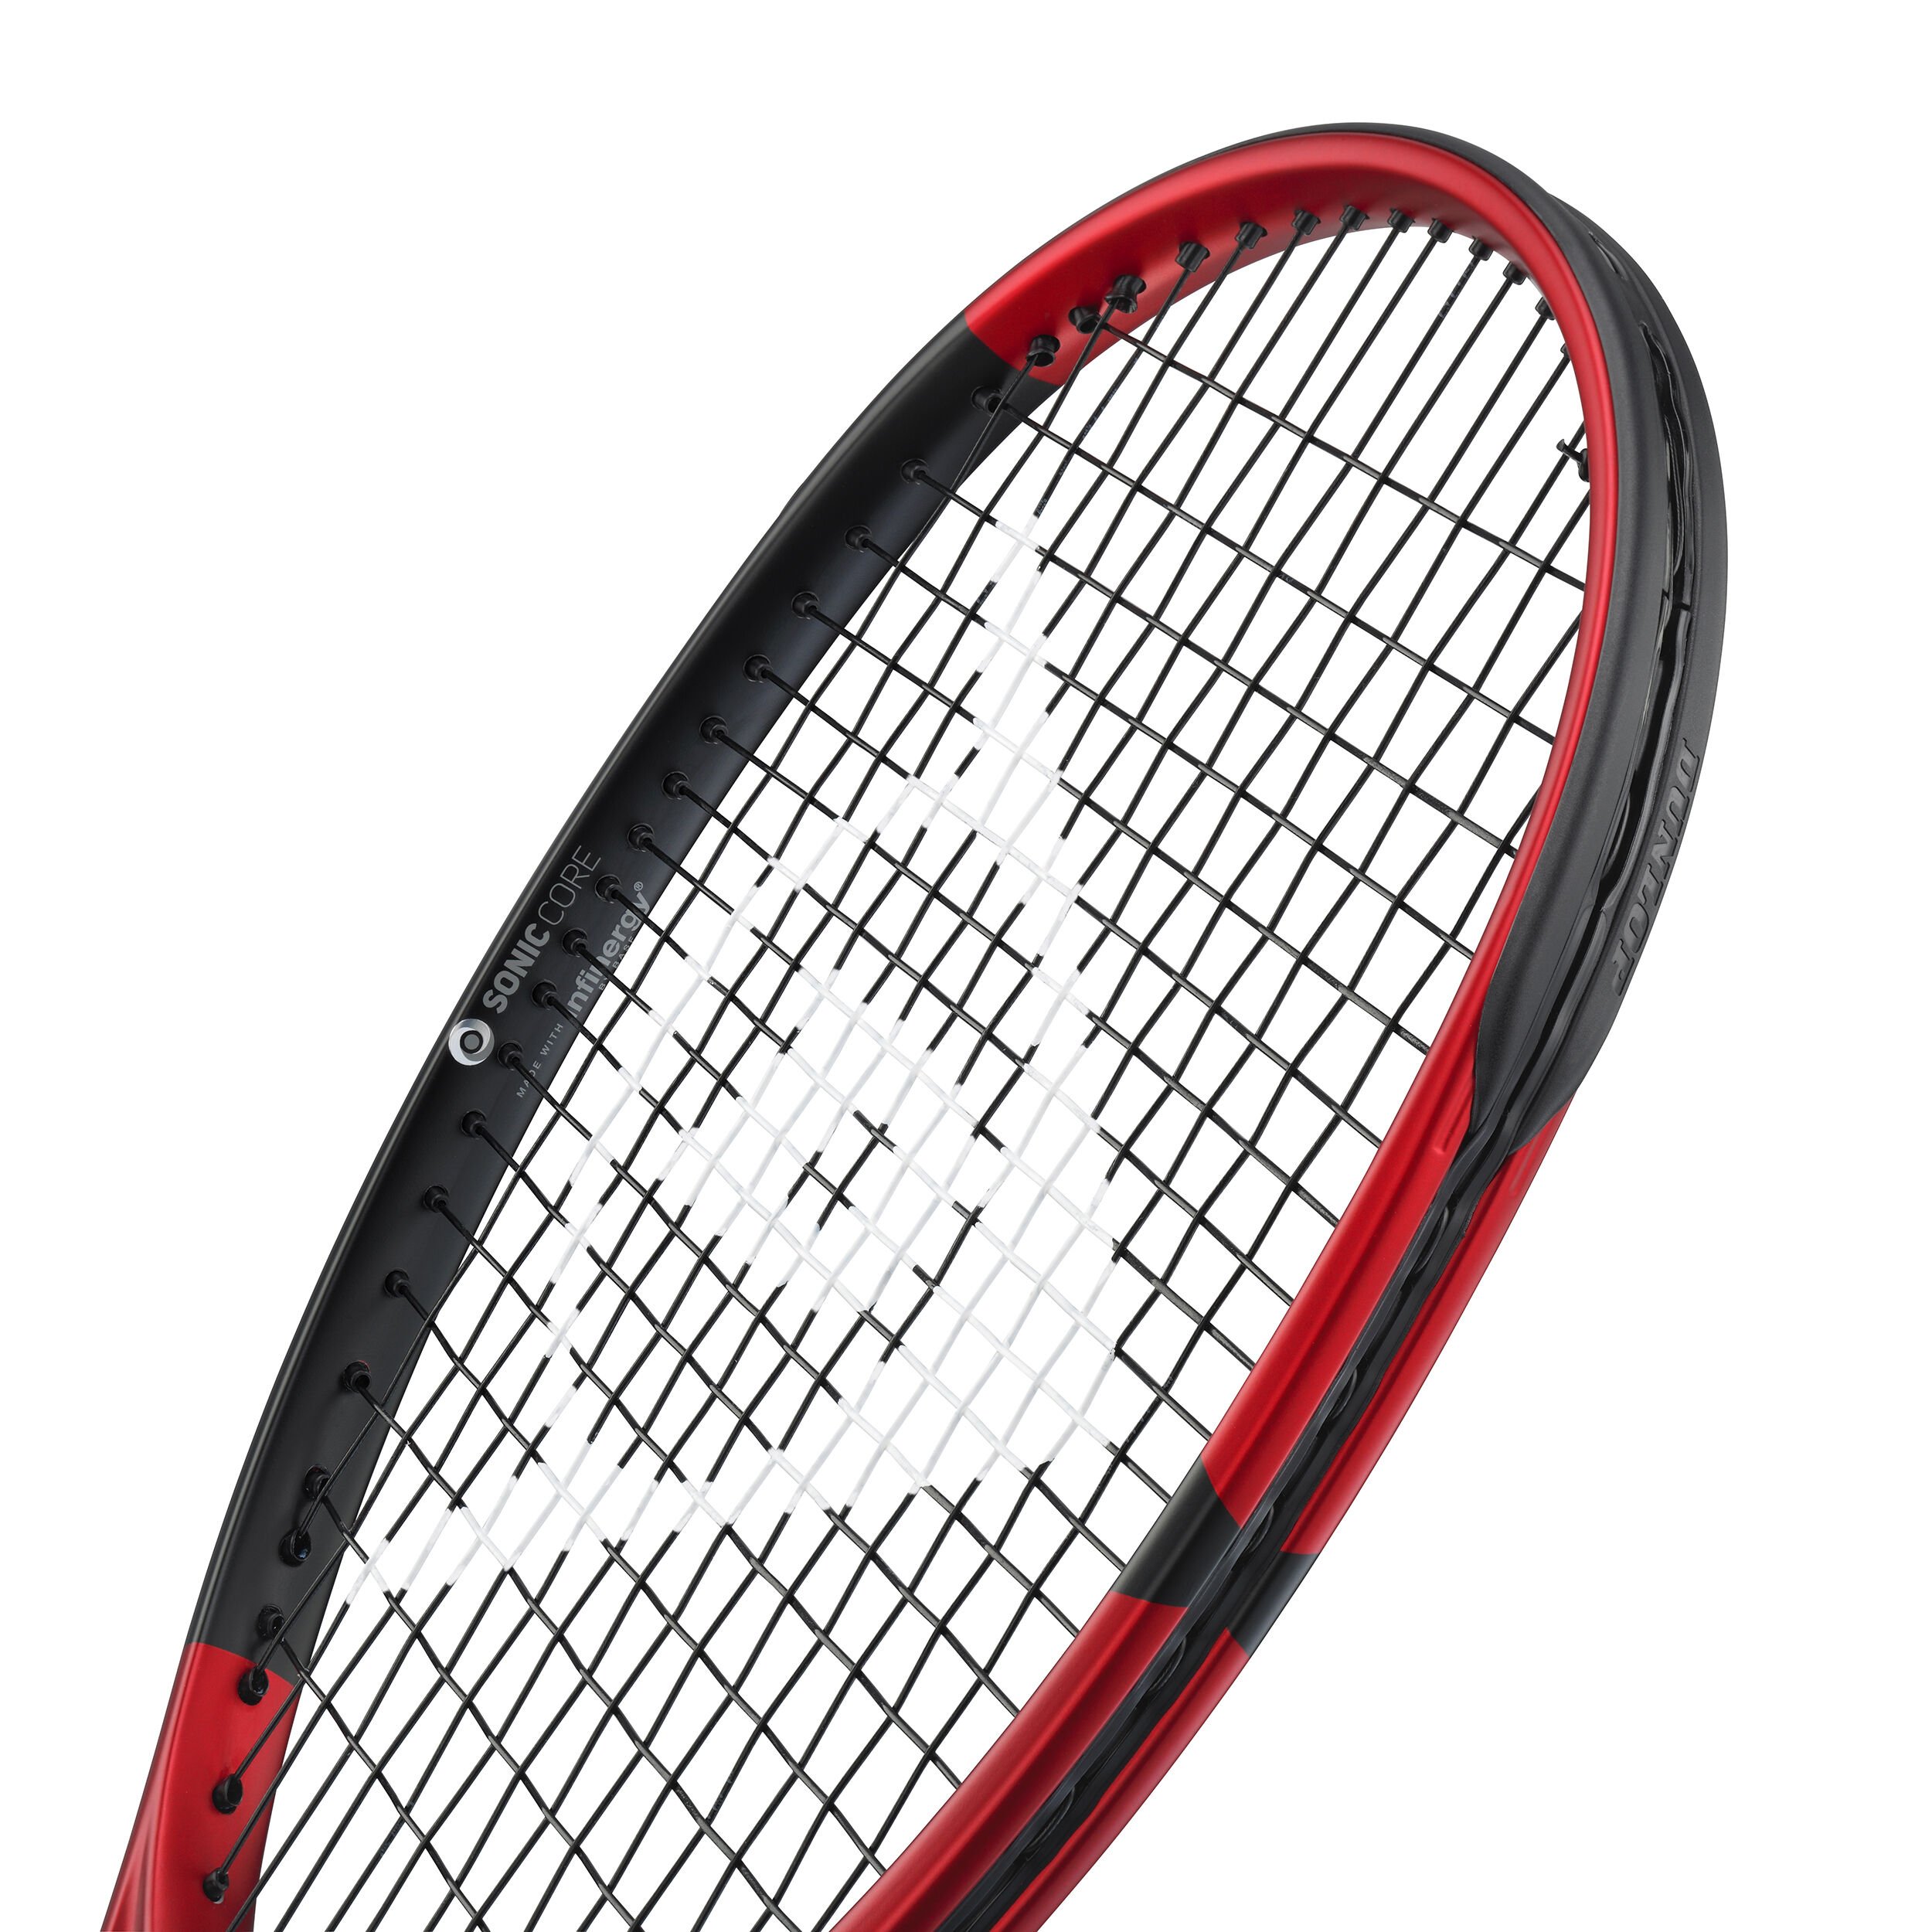 DUNLOP CX 200 Junior Racchetta da tennis